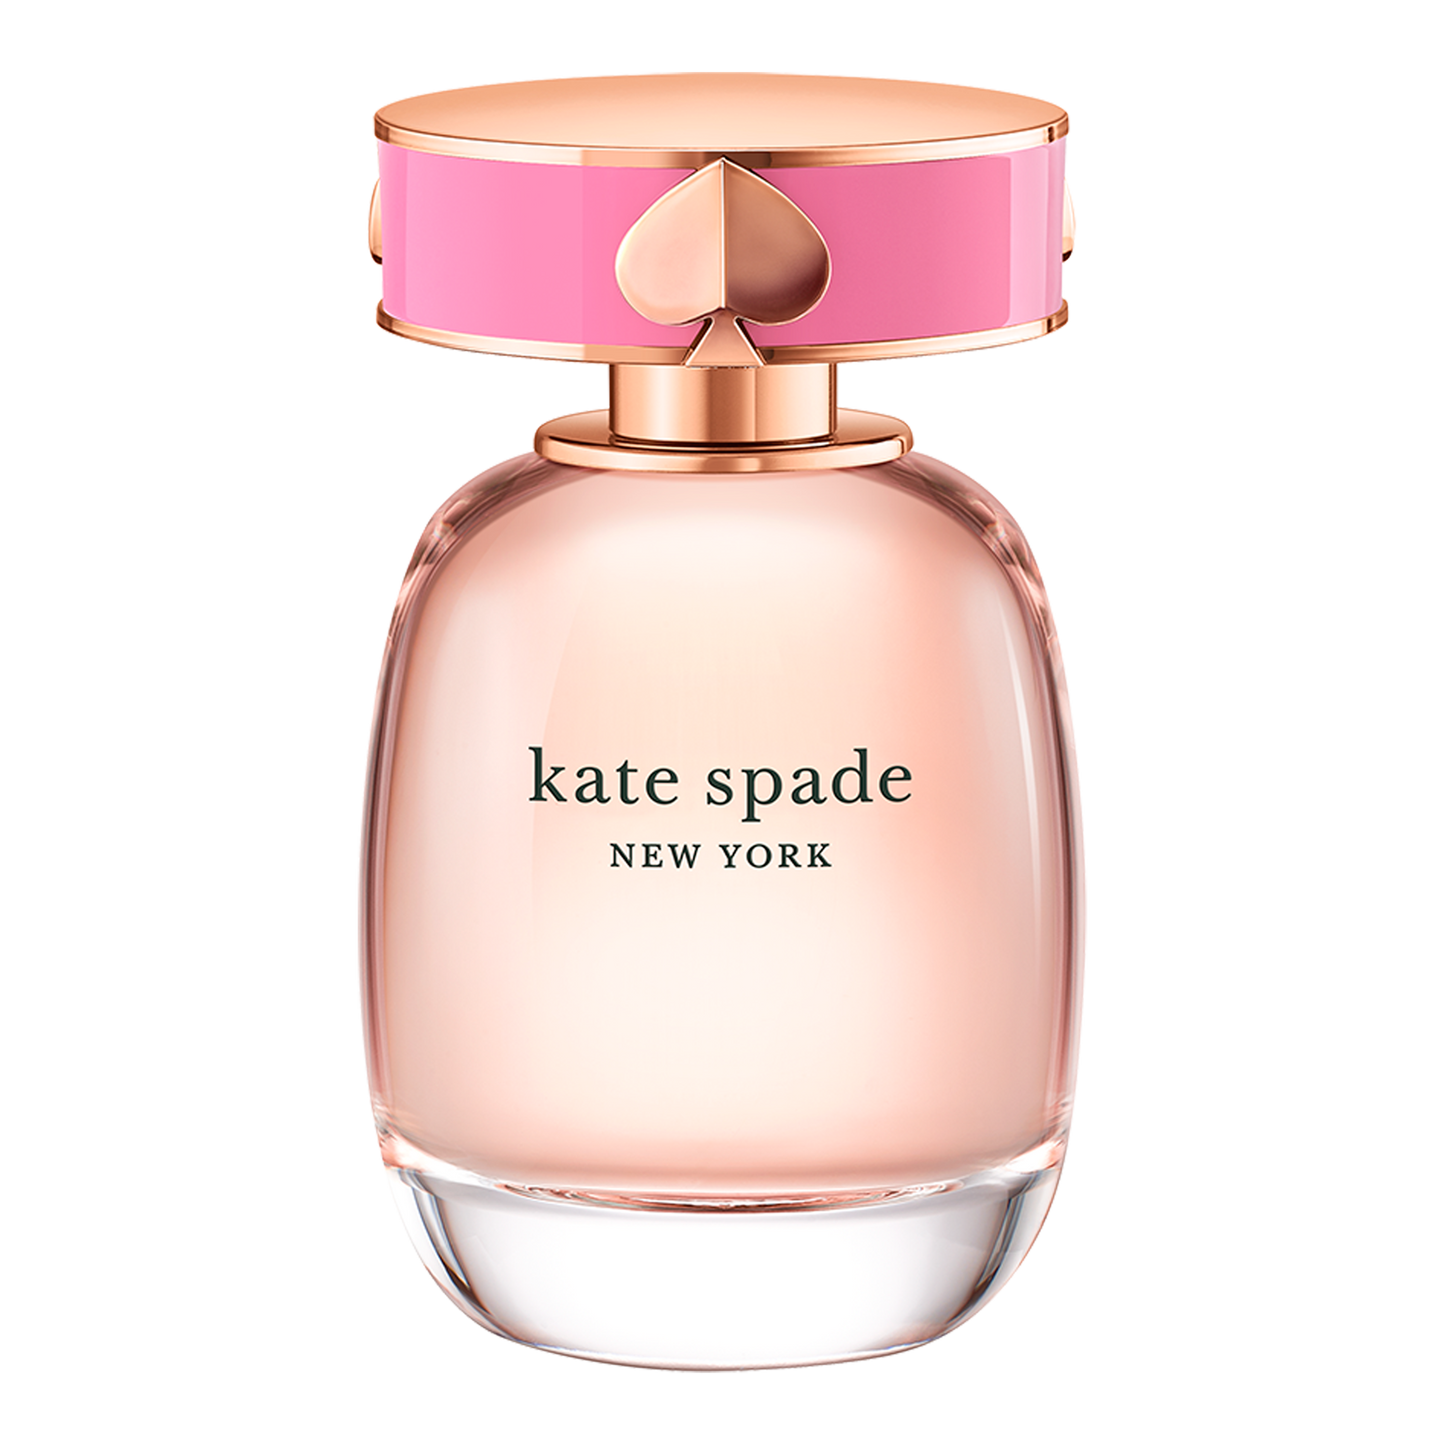 Kate Spade New York Eau de Parfum. 2Oz/60ml